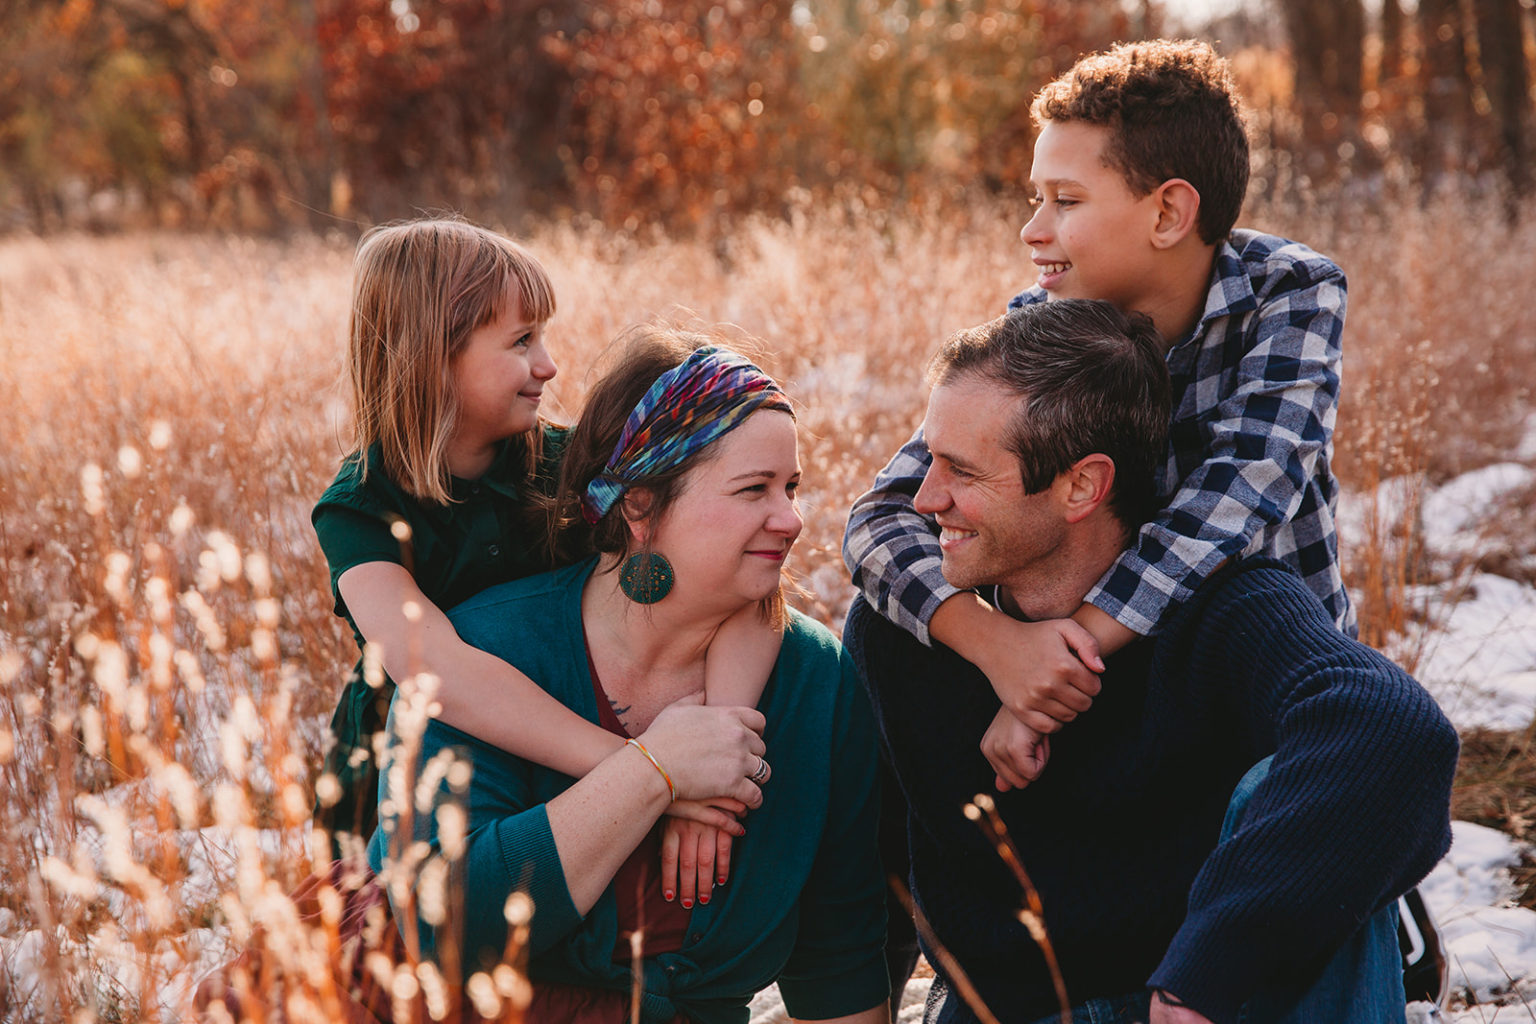 Family Photographs Help Build a Sense of Belonging Guest